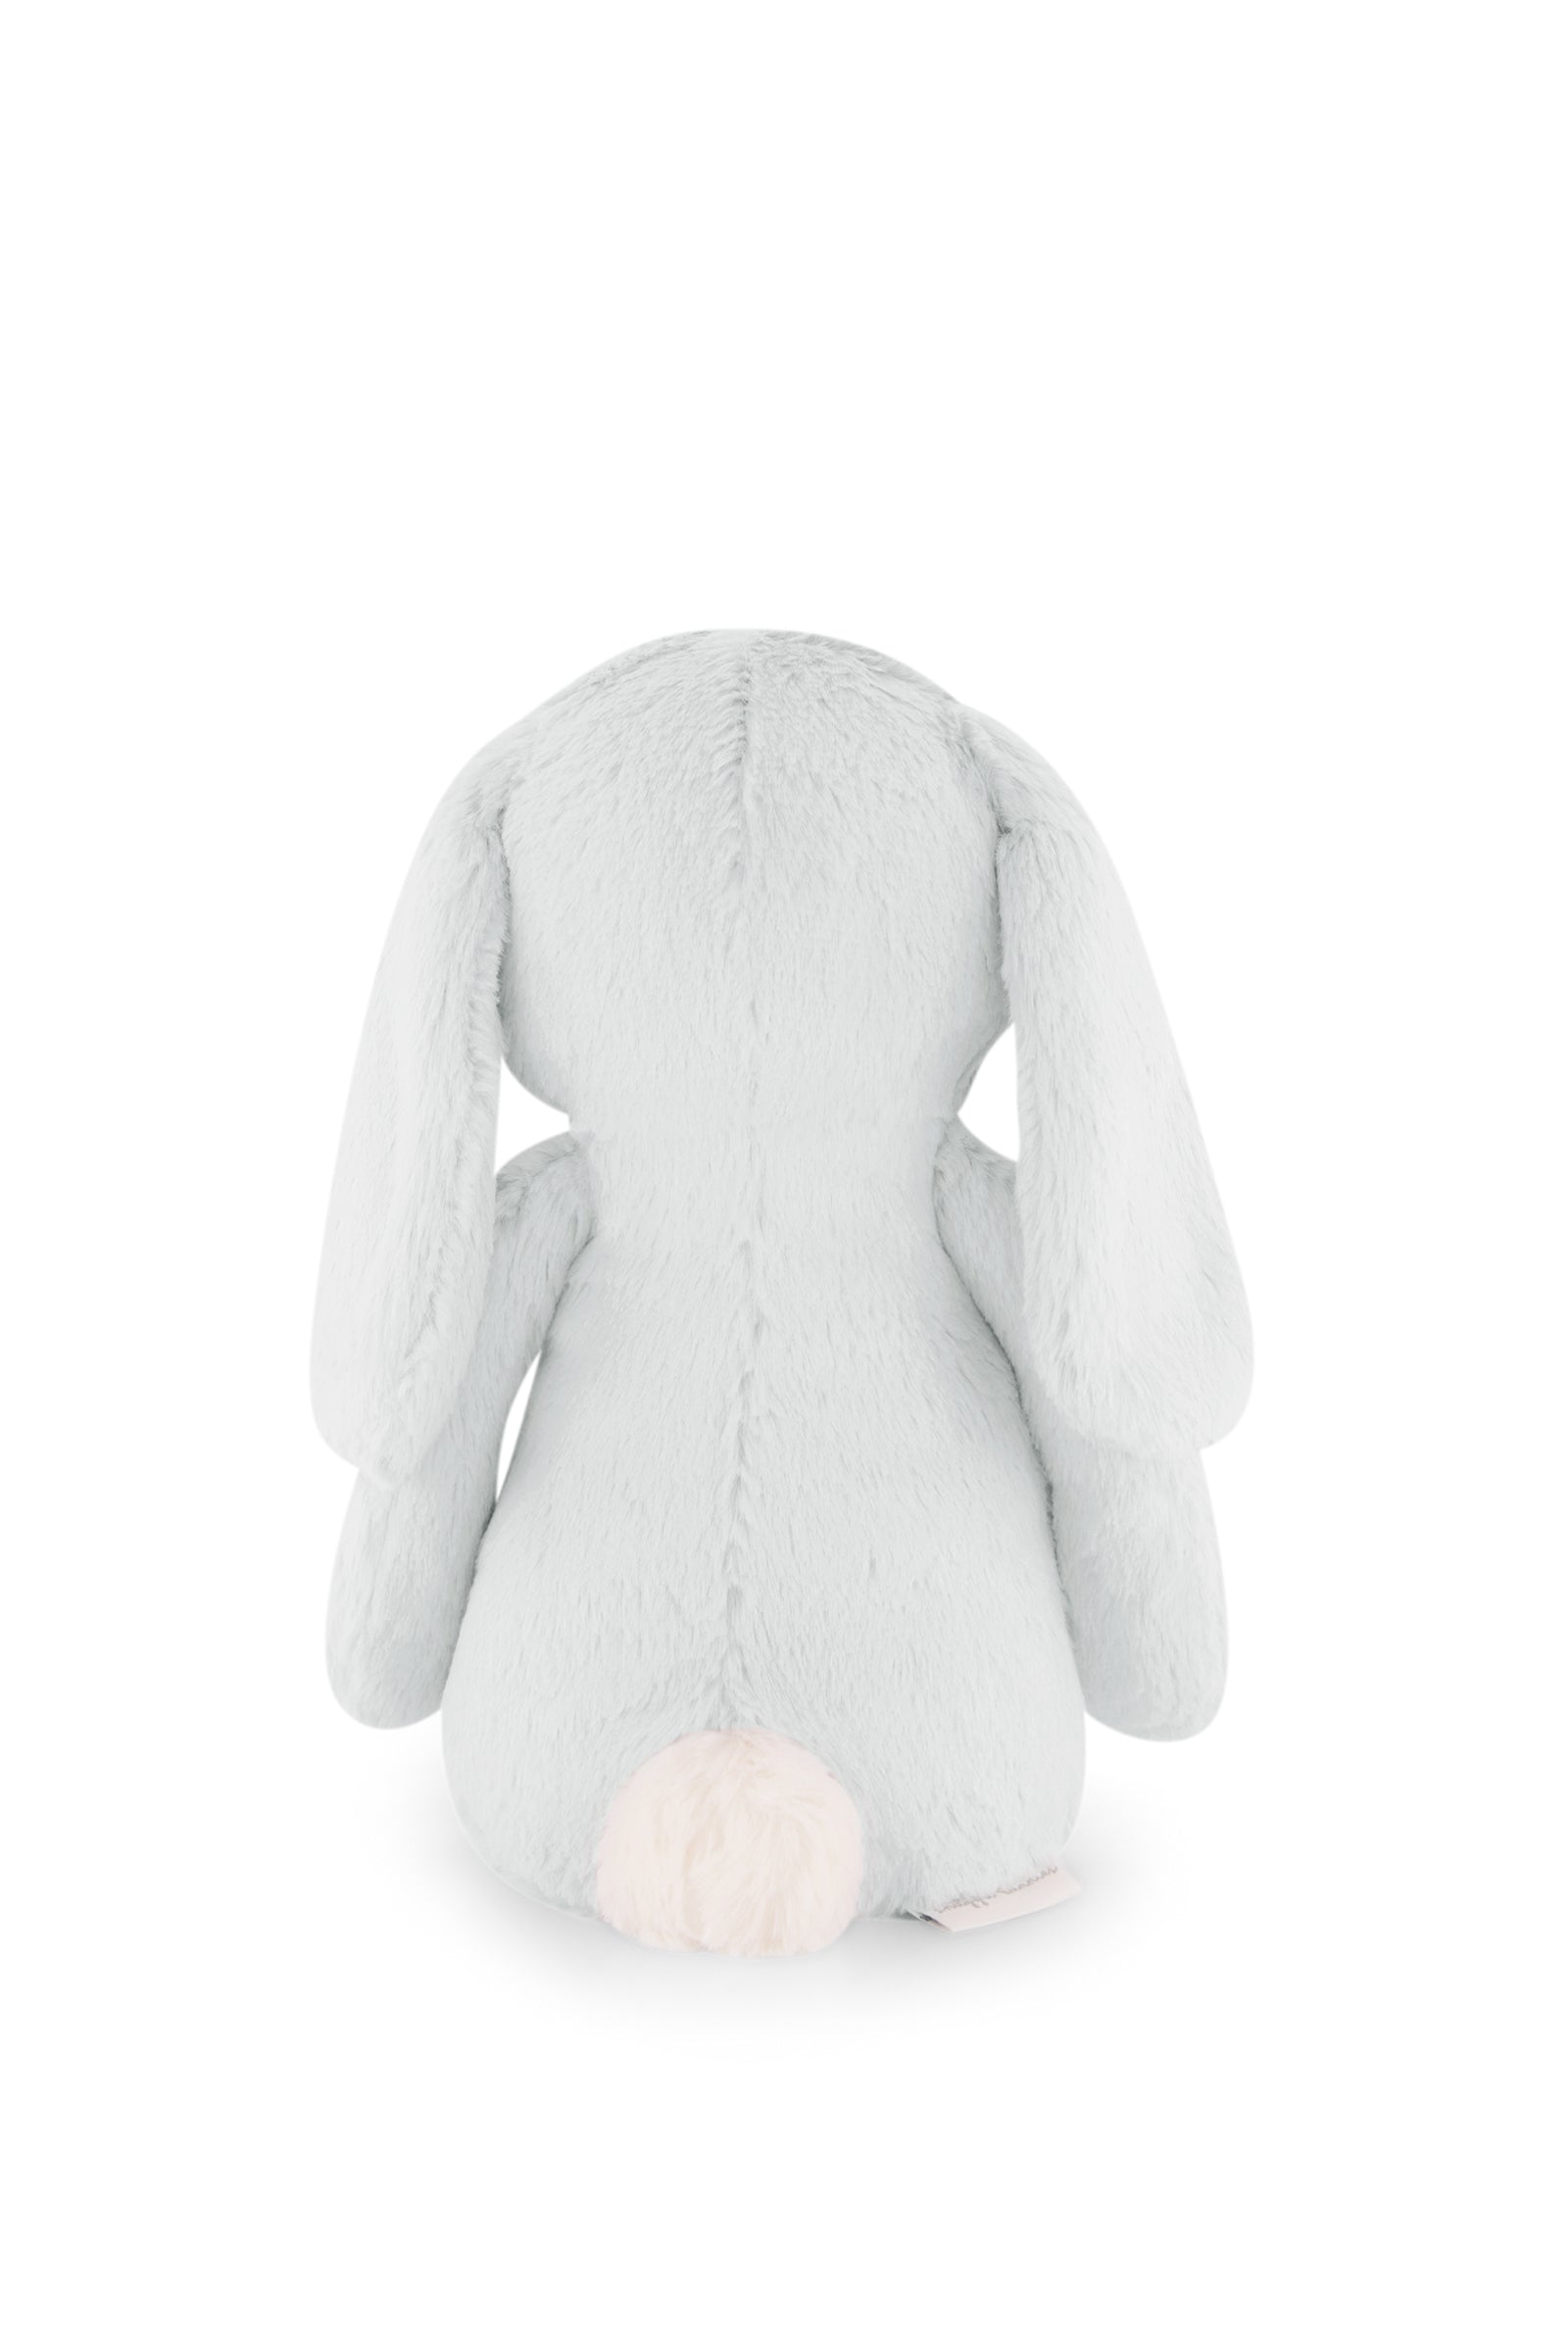 Jamie Kay-Snuggle Bunnies-Penelope the Bunny-Moonbeam 30cm